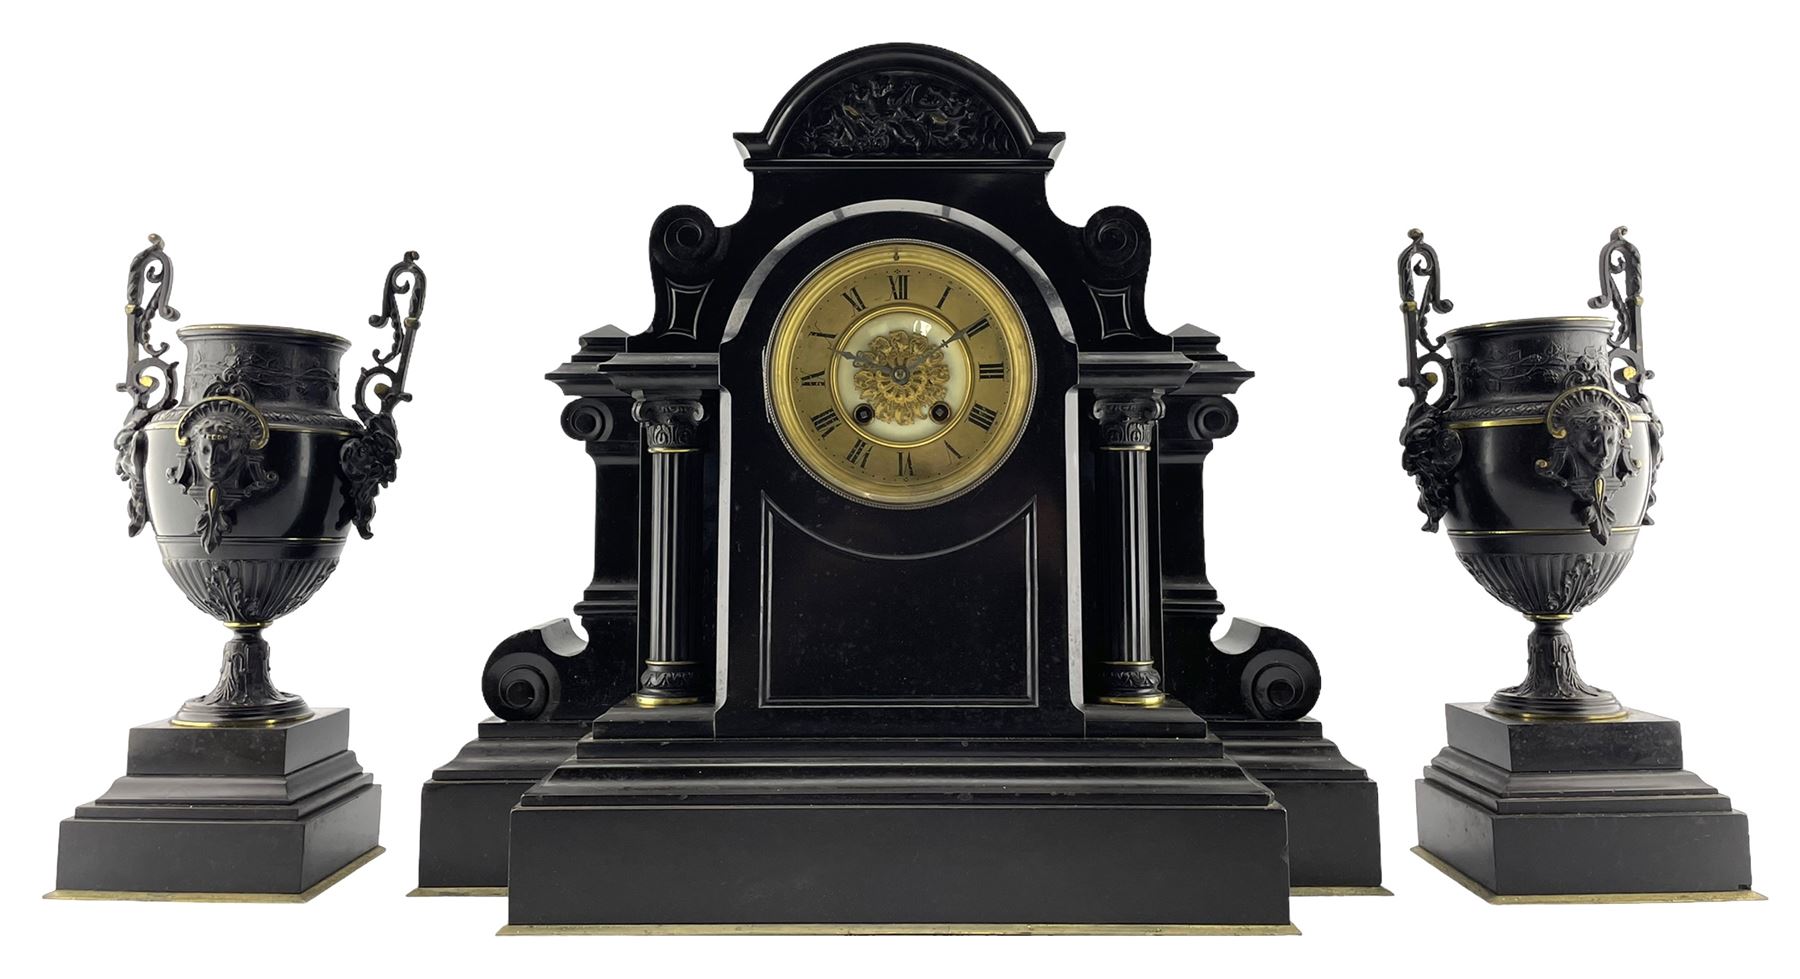 French - Belgium slate mantle clock and garniture c1880